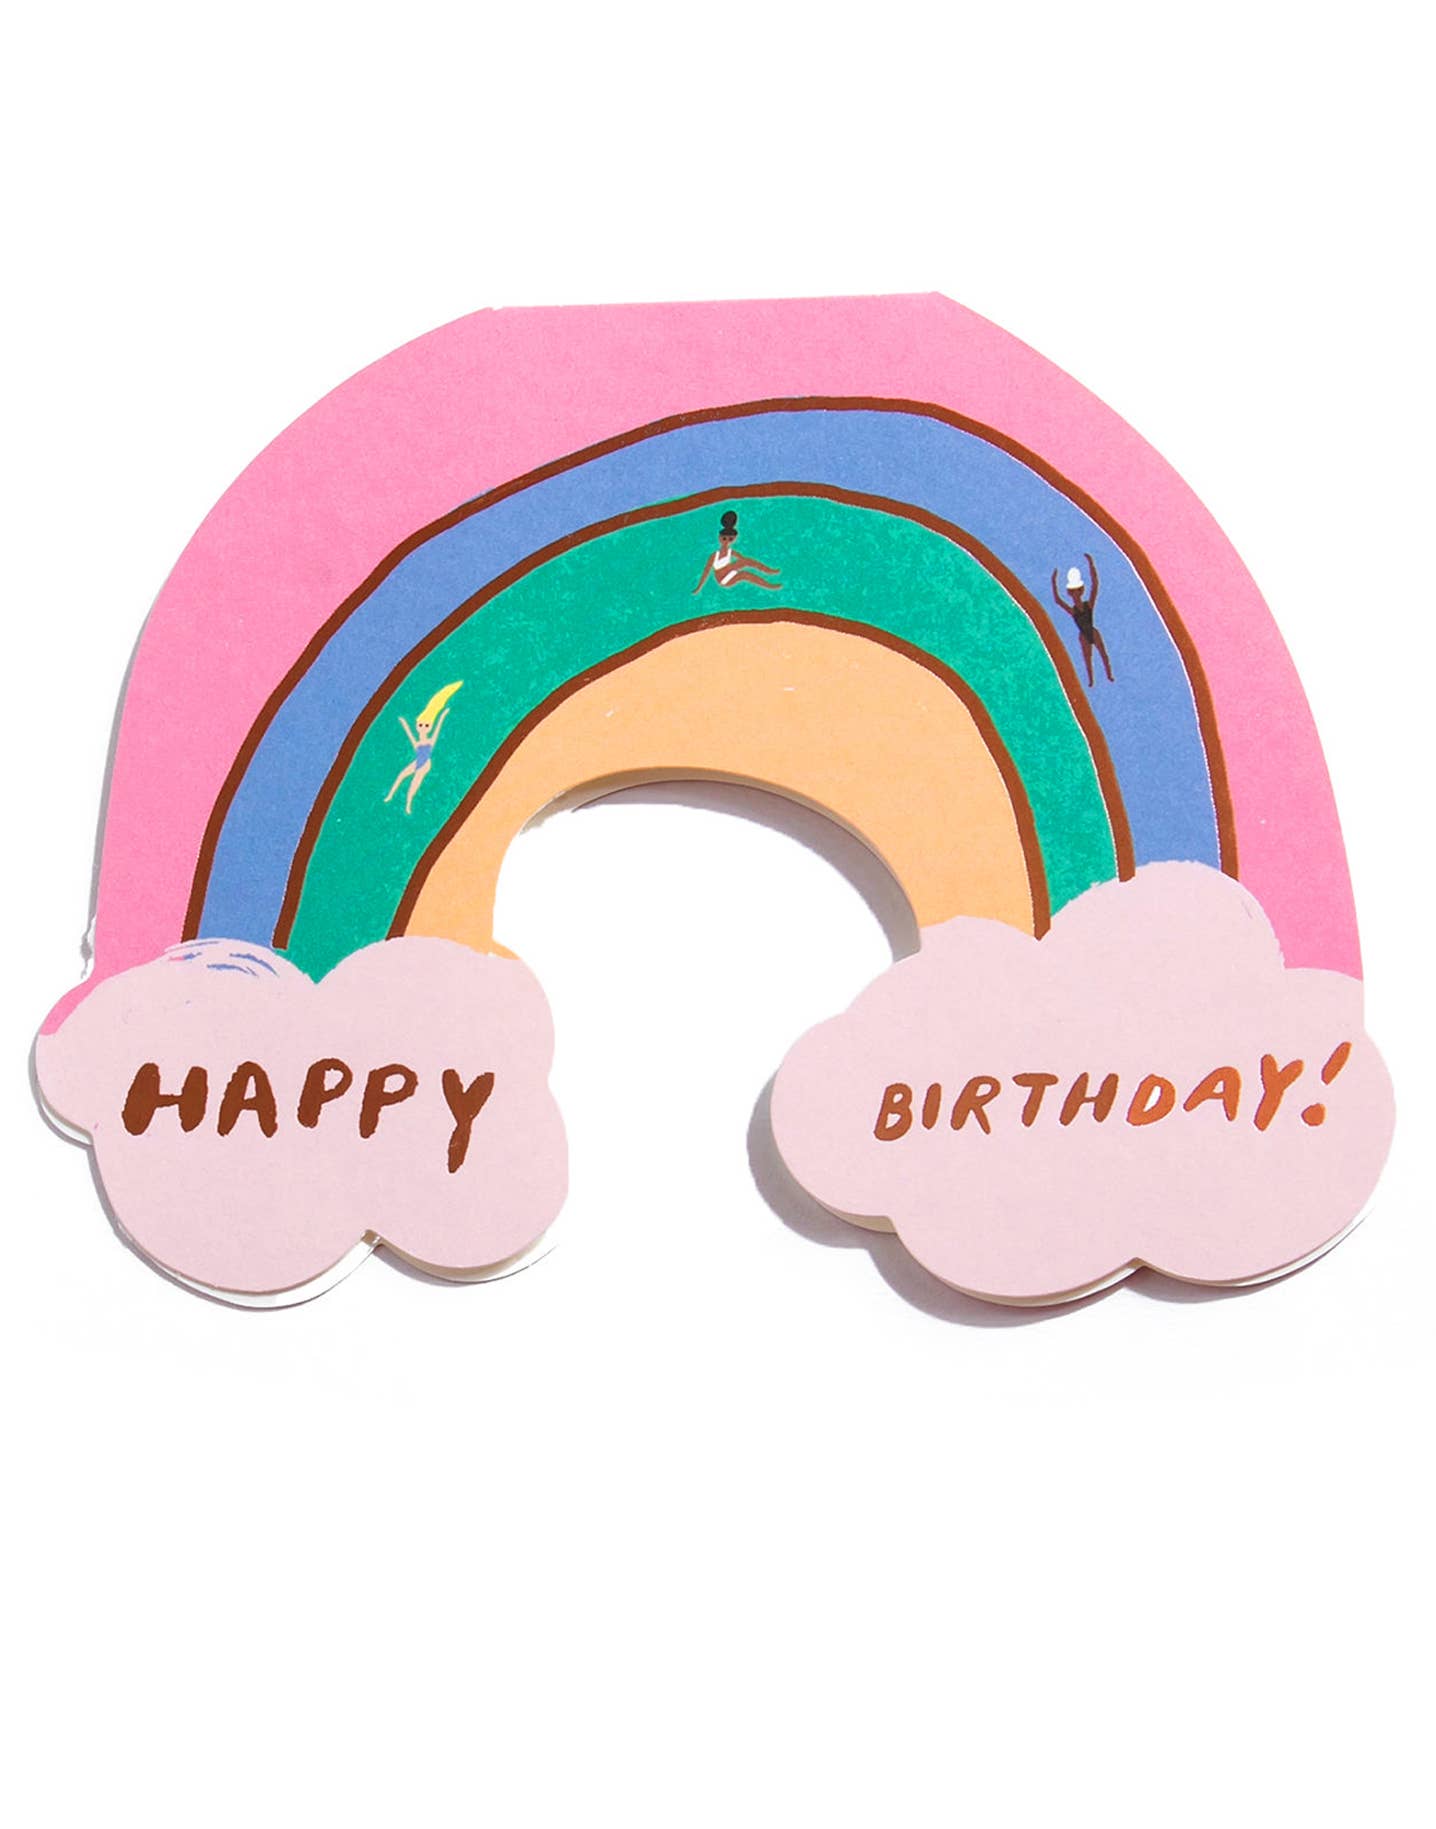 Rainbow - Shaped Birthday Card - Proper